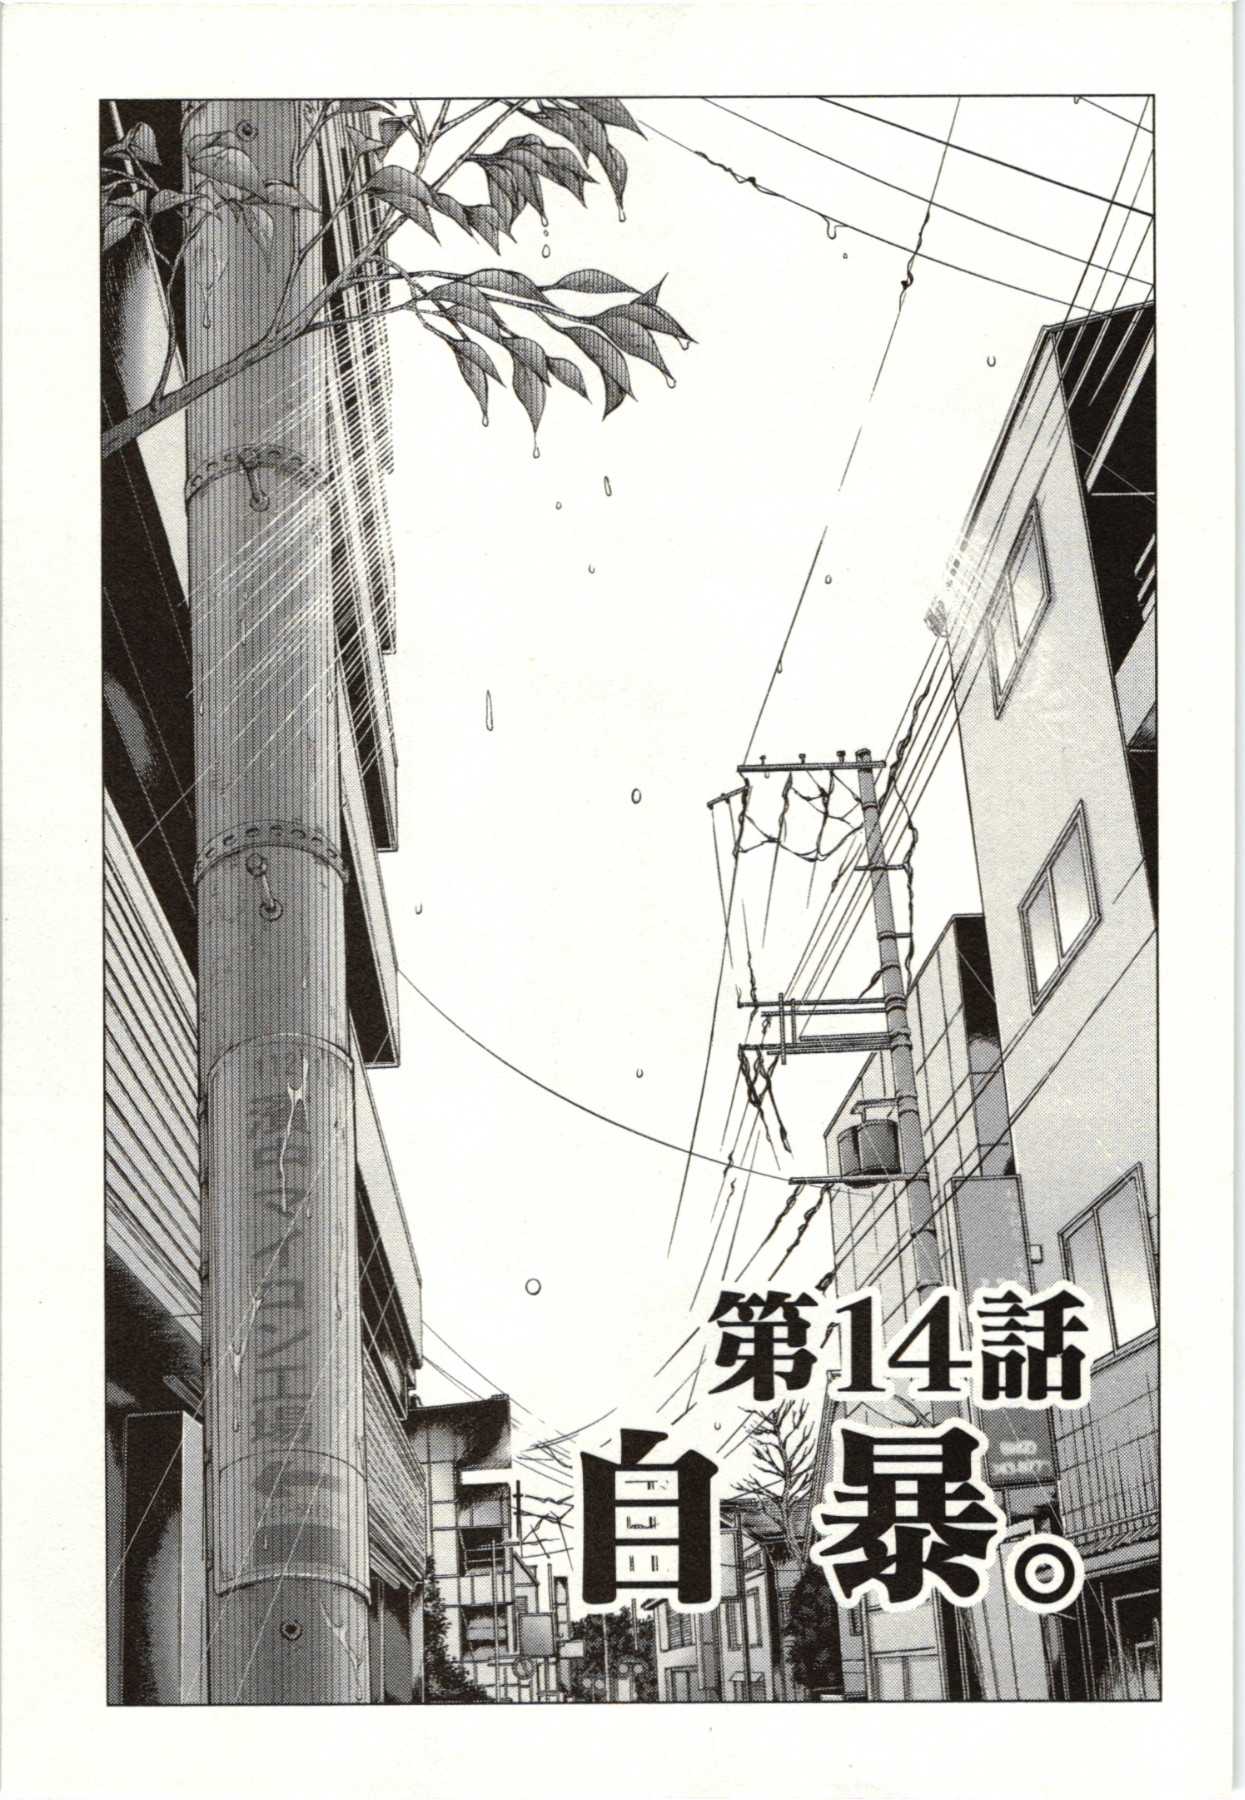 [Maya Miyazaki] /Blush-DC Himitsu Vol.02 [宮崎摩耶] /Blush-DC ～秘・蜜～ Vol.02